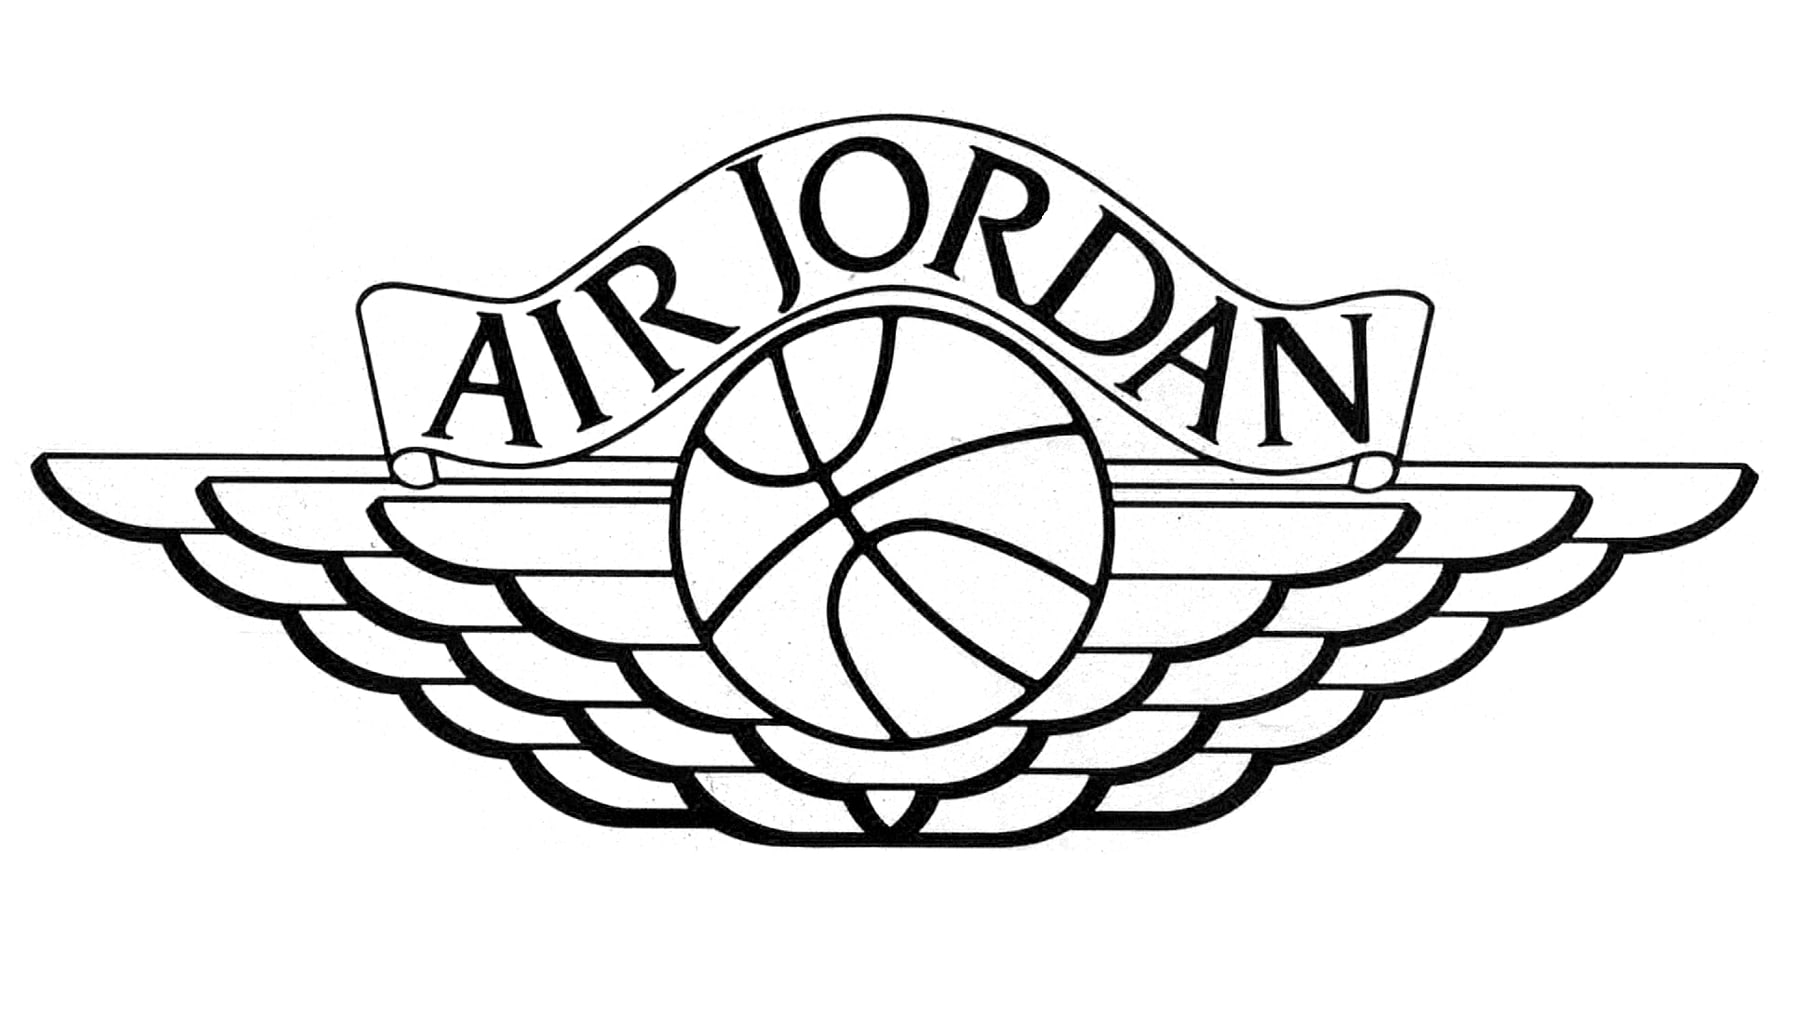 Air Jordan Wings logo designed by Peter Moore